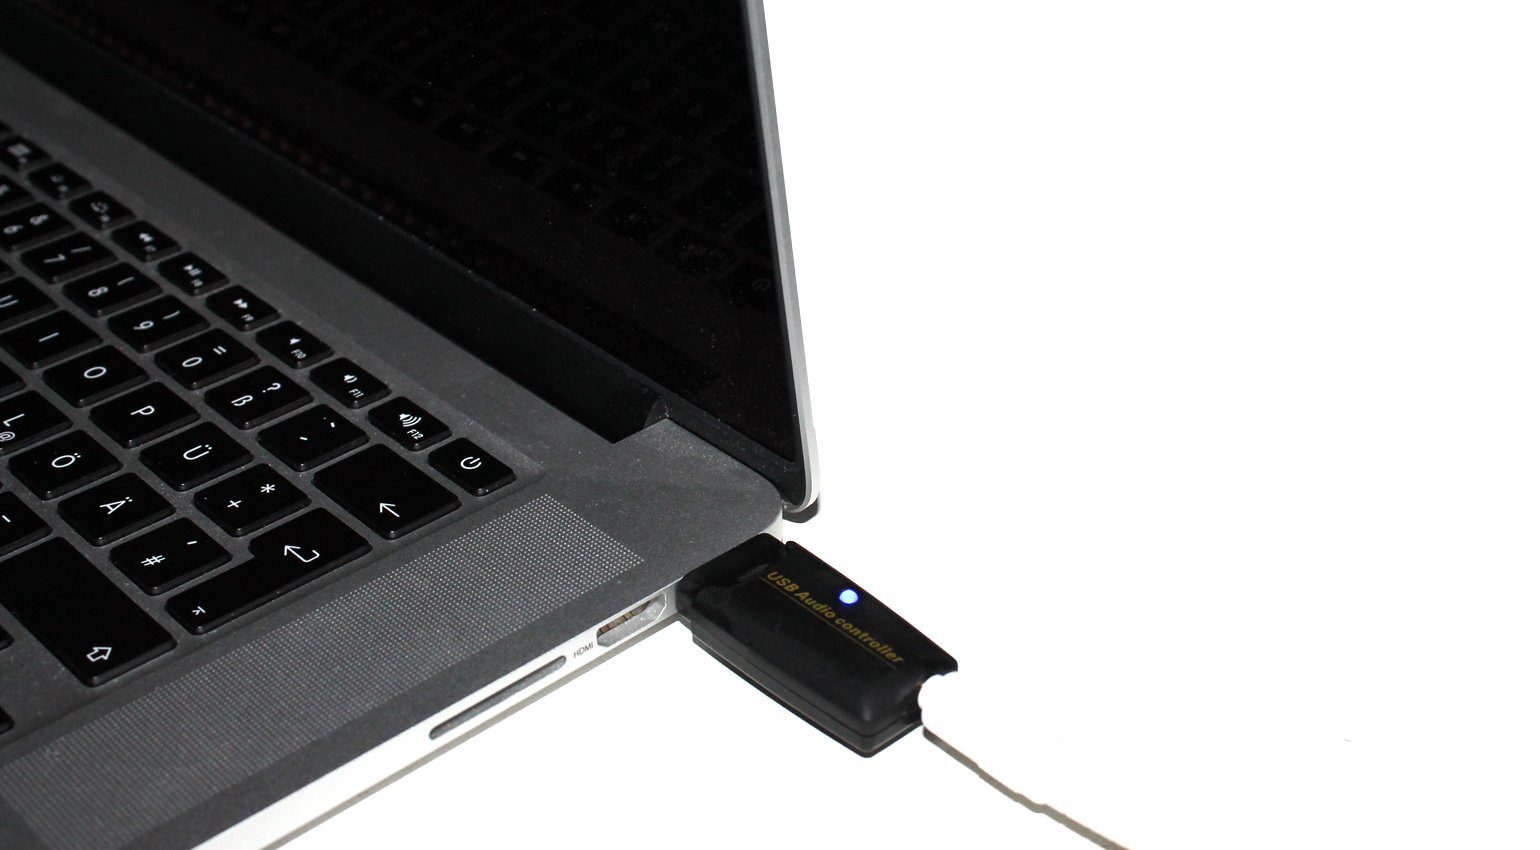 Preview-Stick am USB-Port